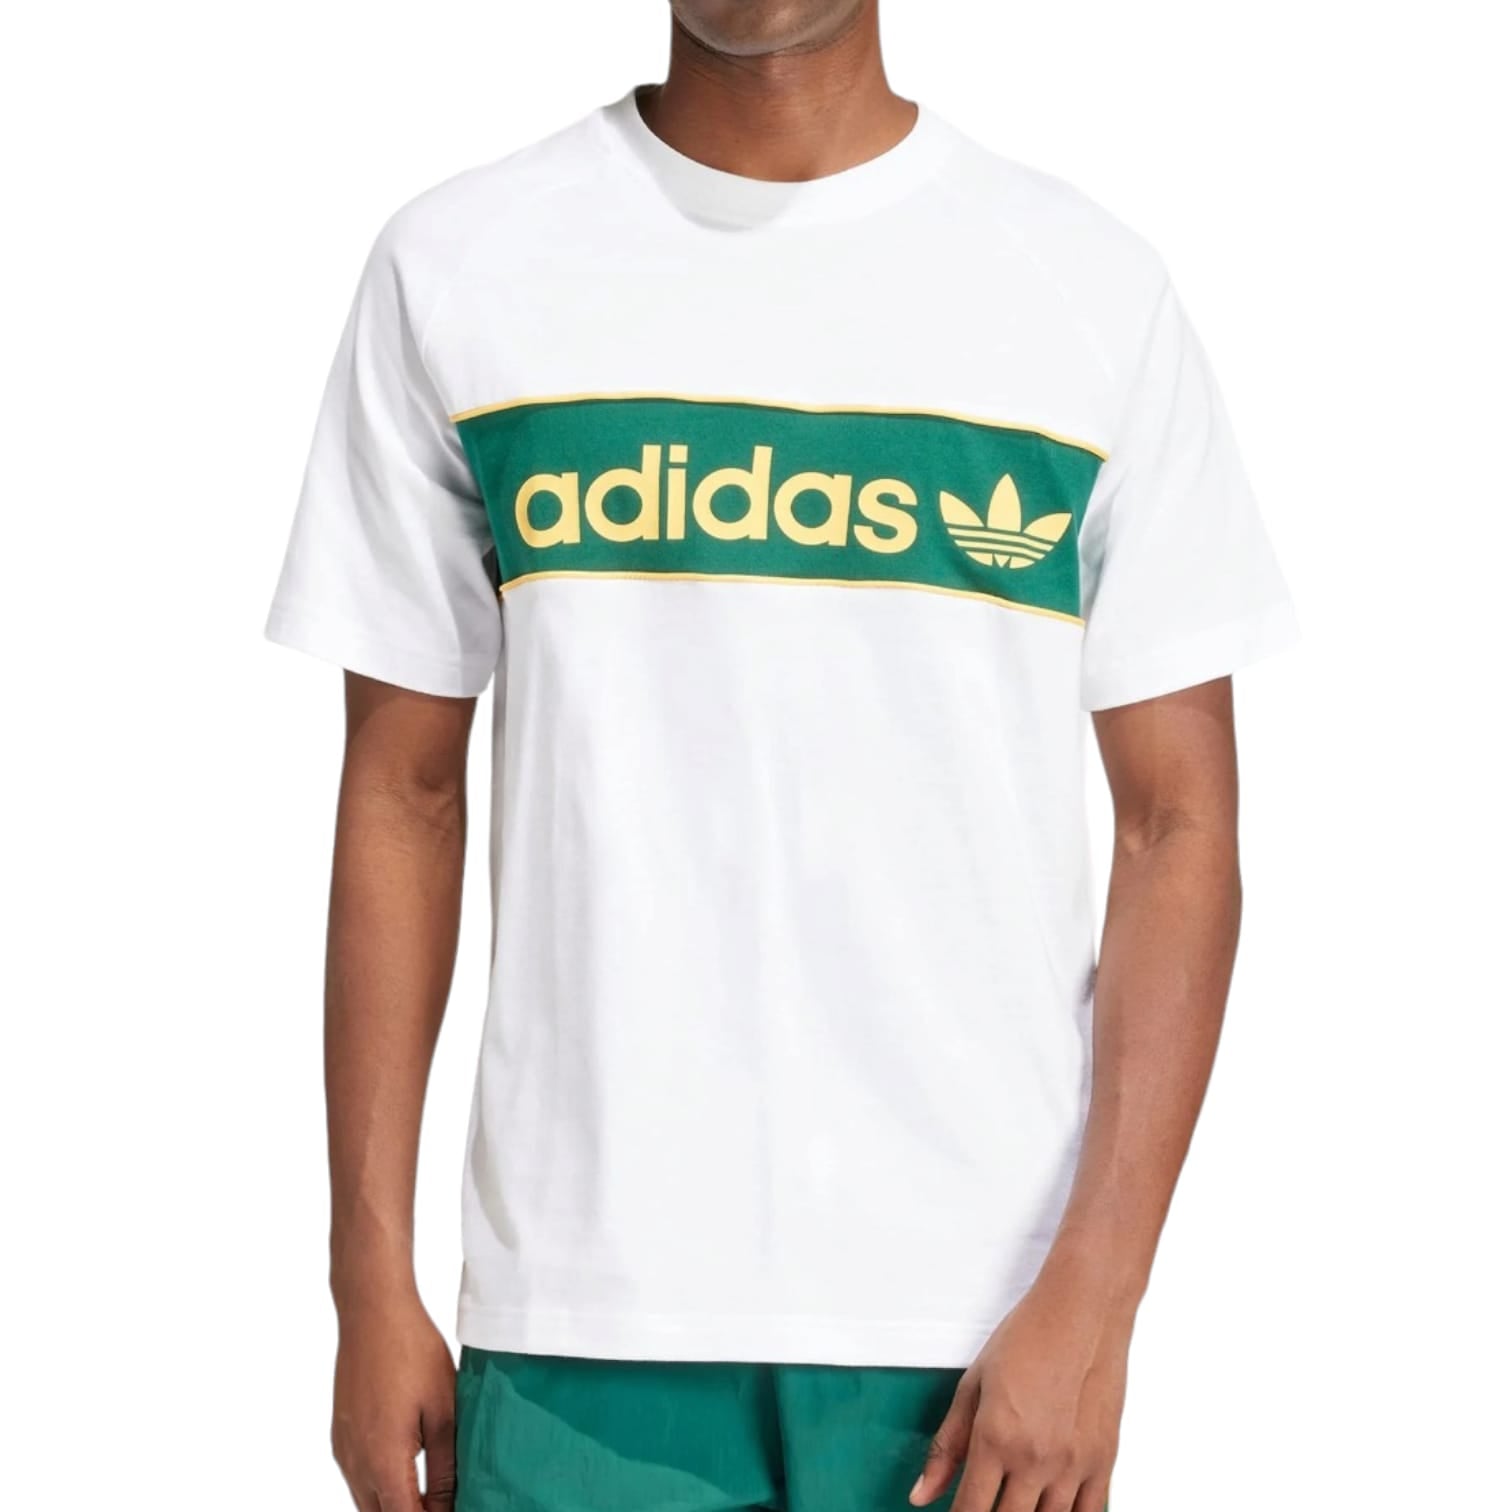 Adidas Orininals T-shirt Uomo